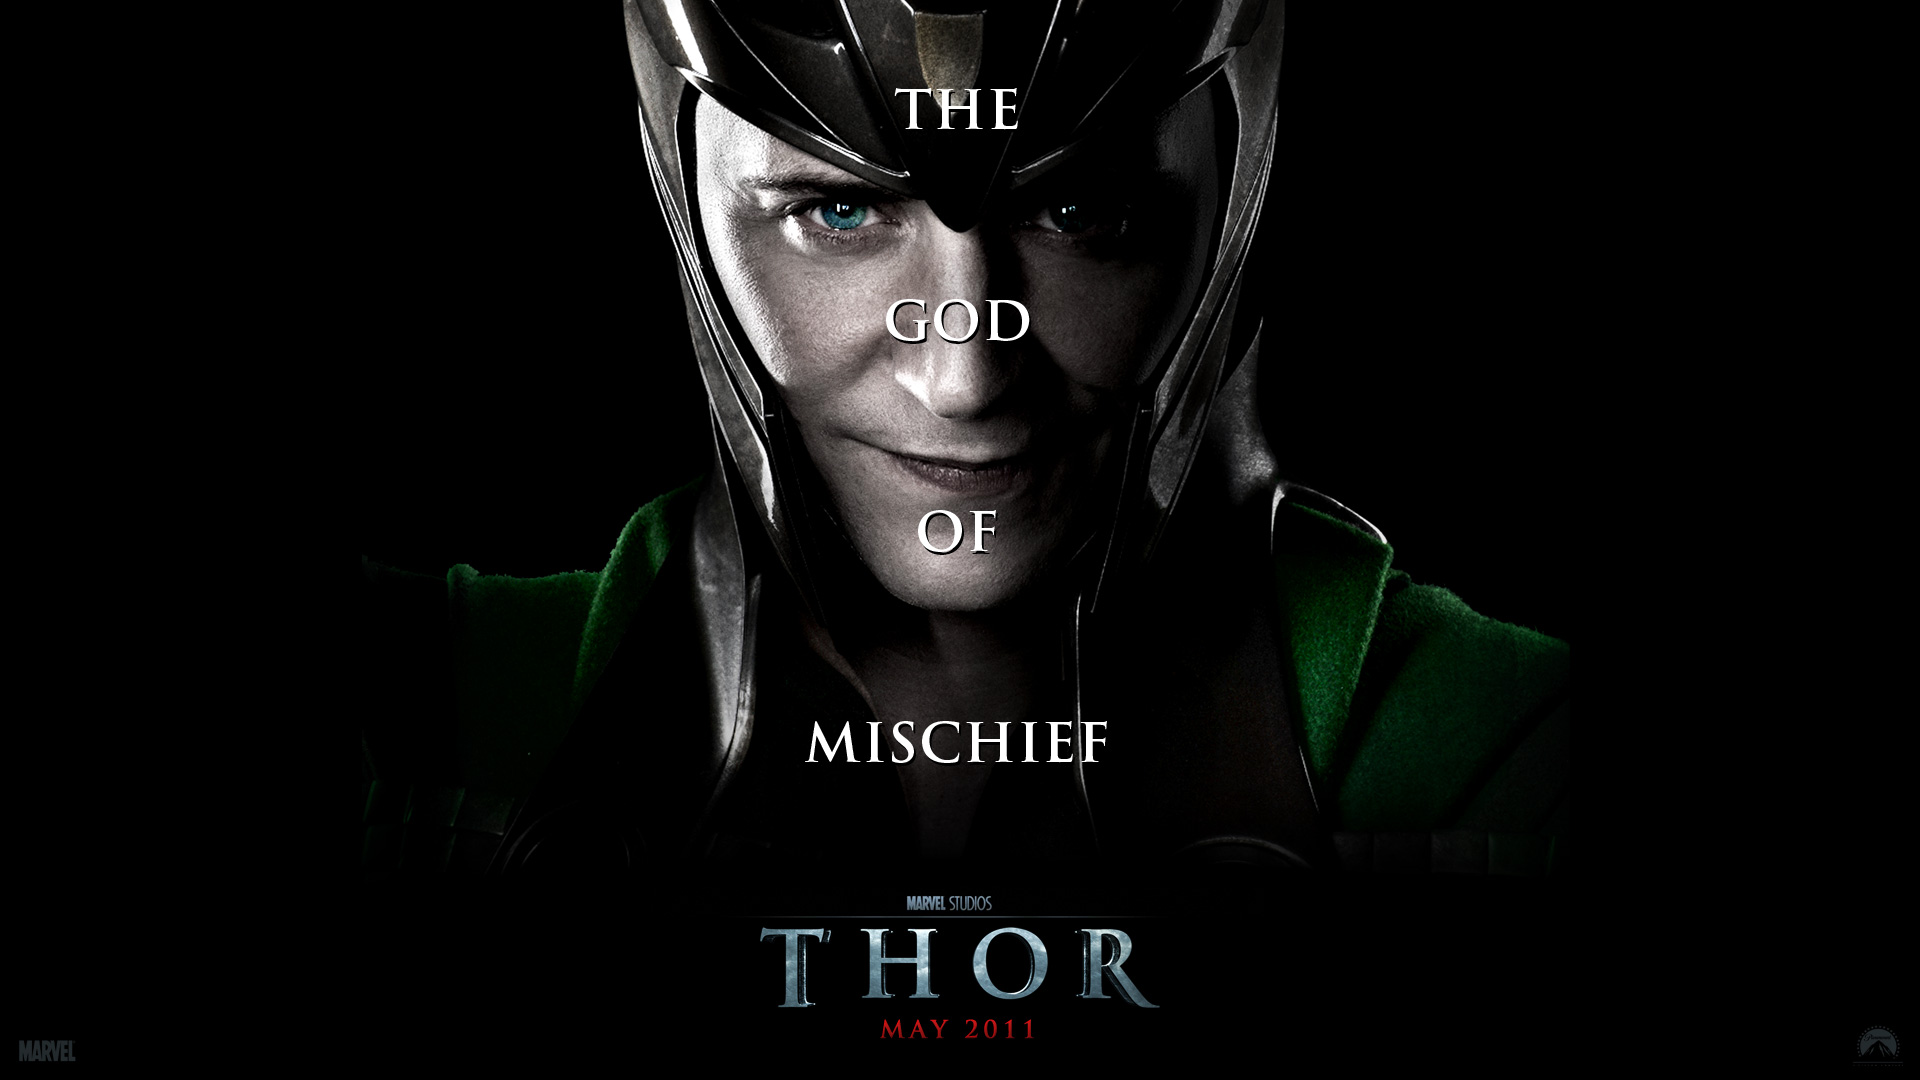 Loki Thor Background Image Amp Pictures Becuo